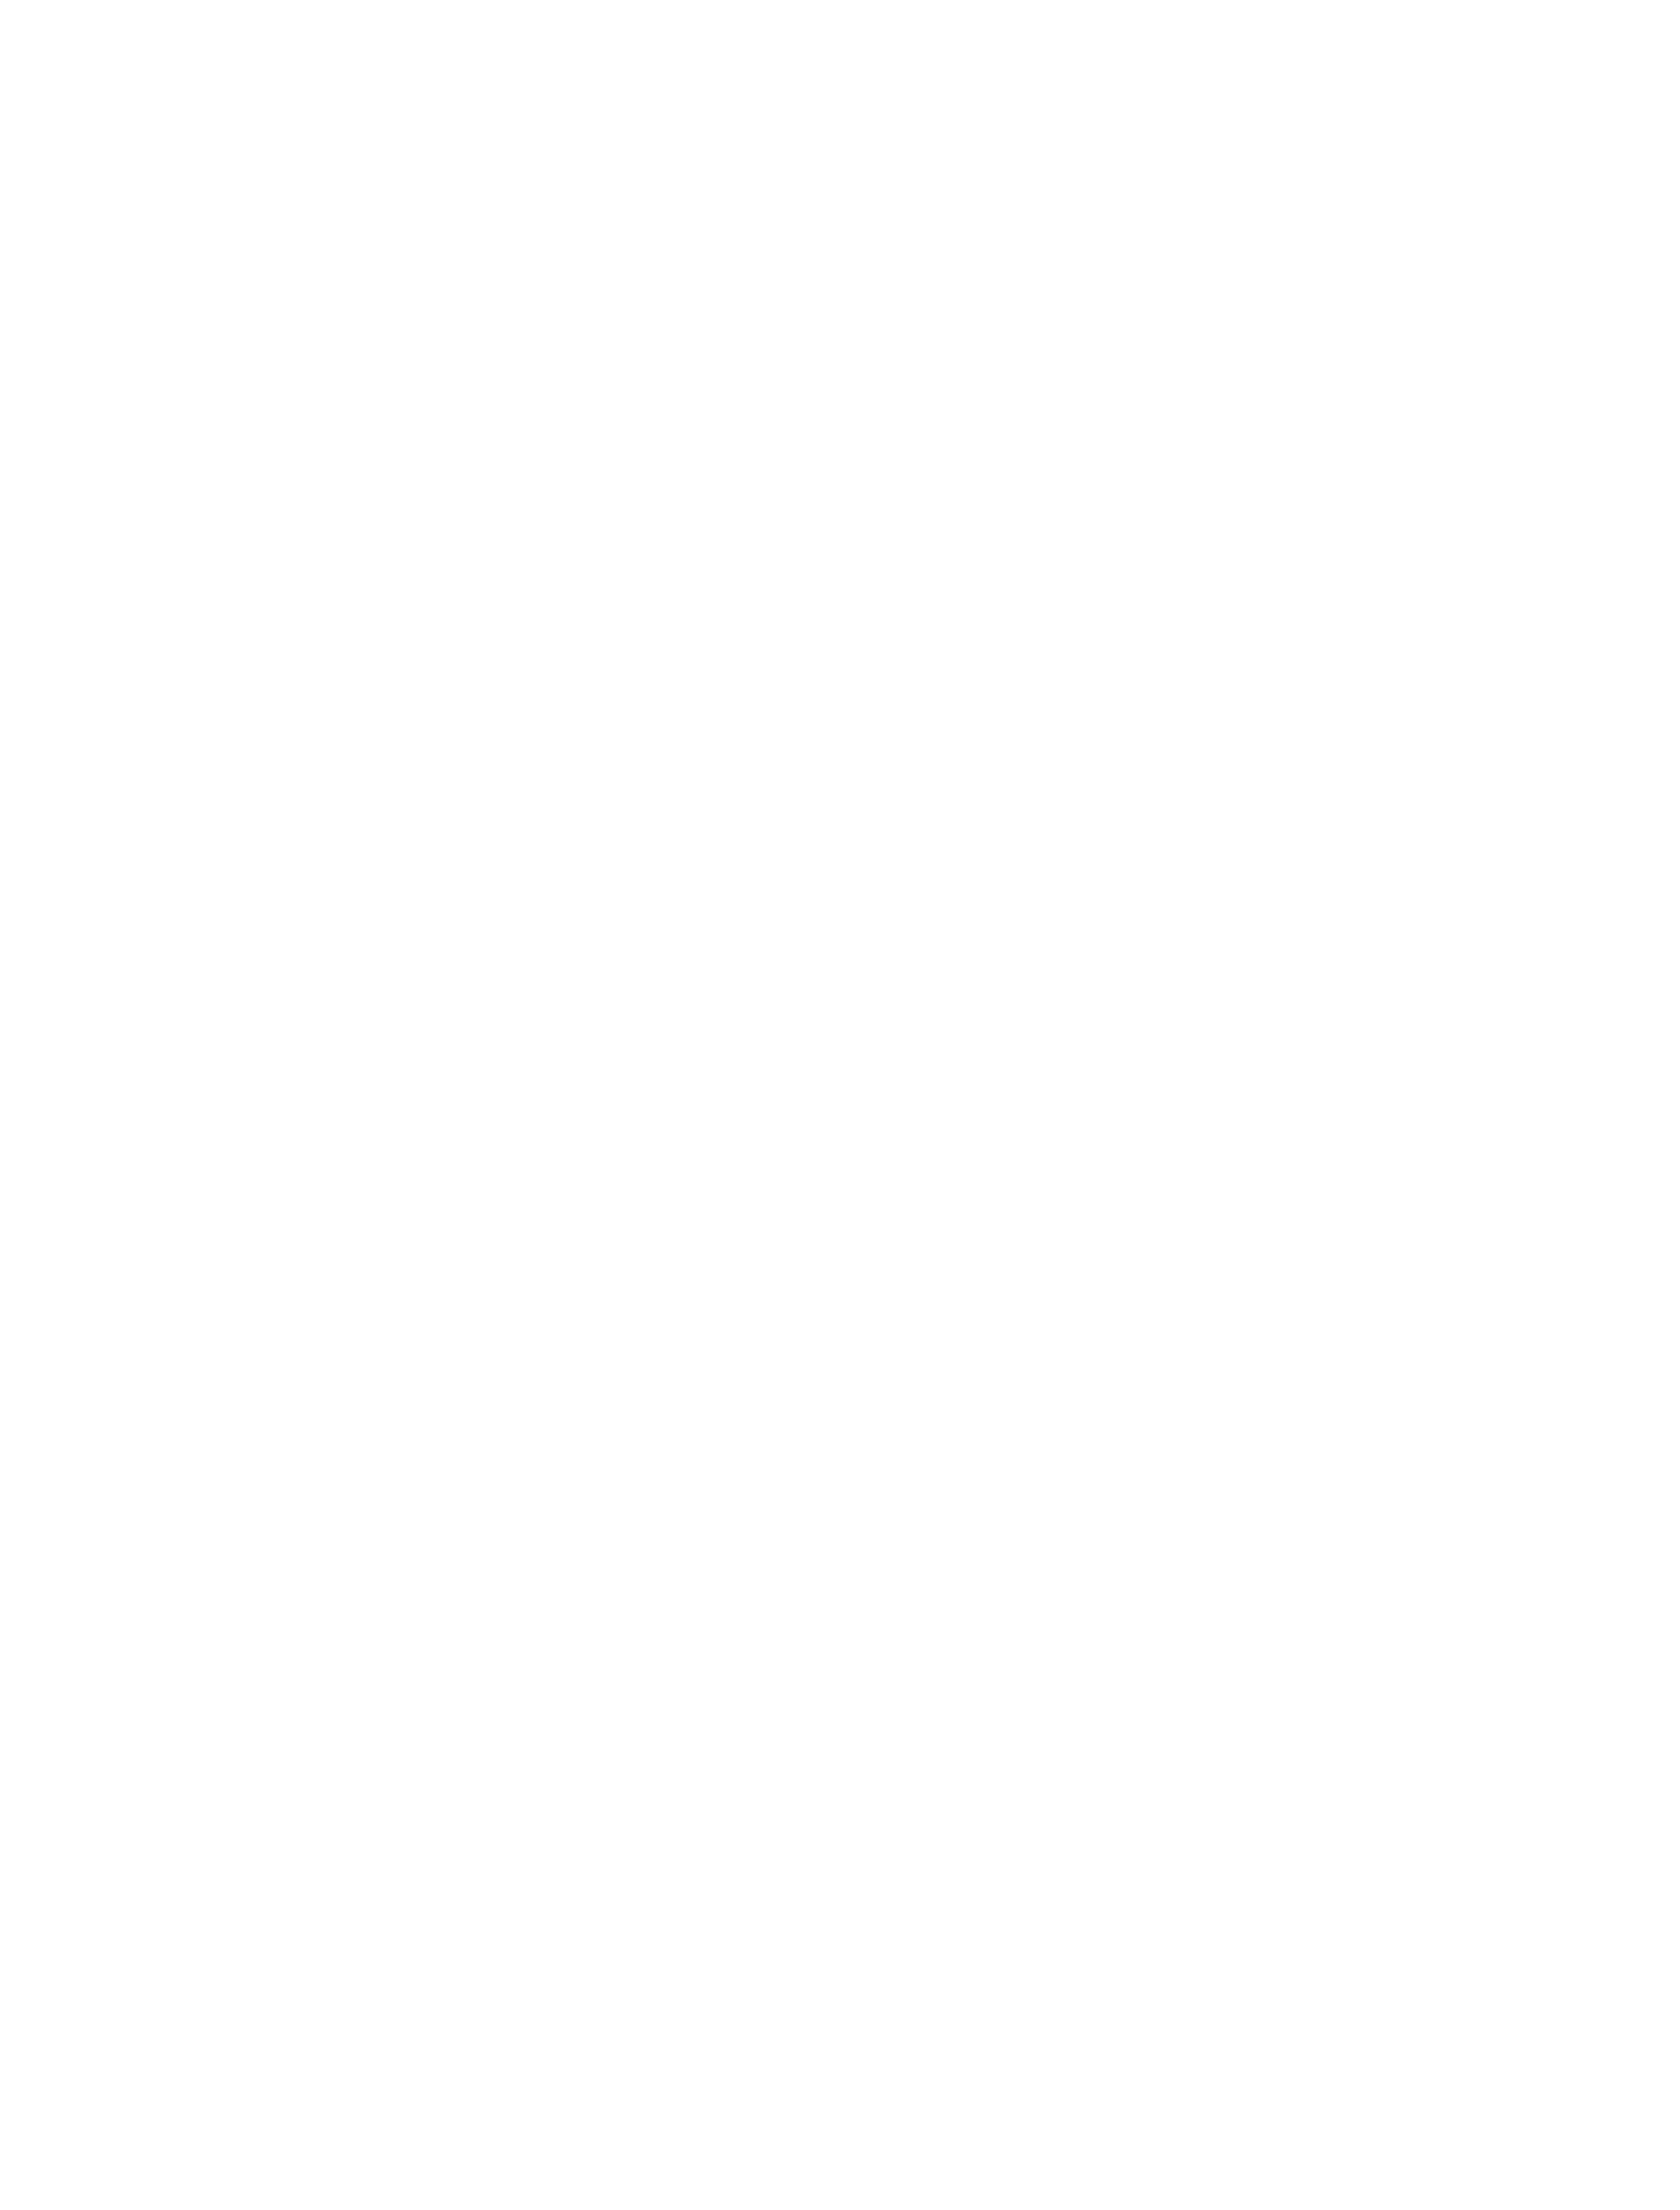 Lucid makeup